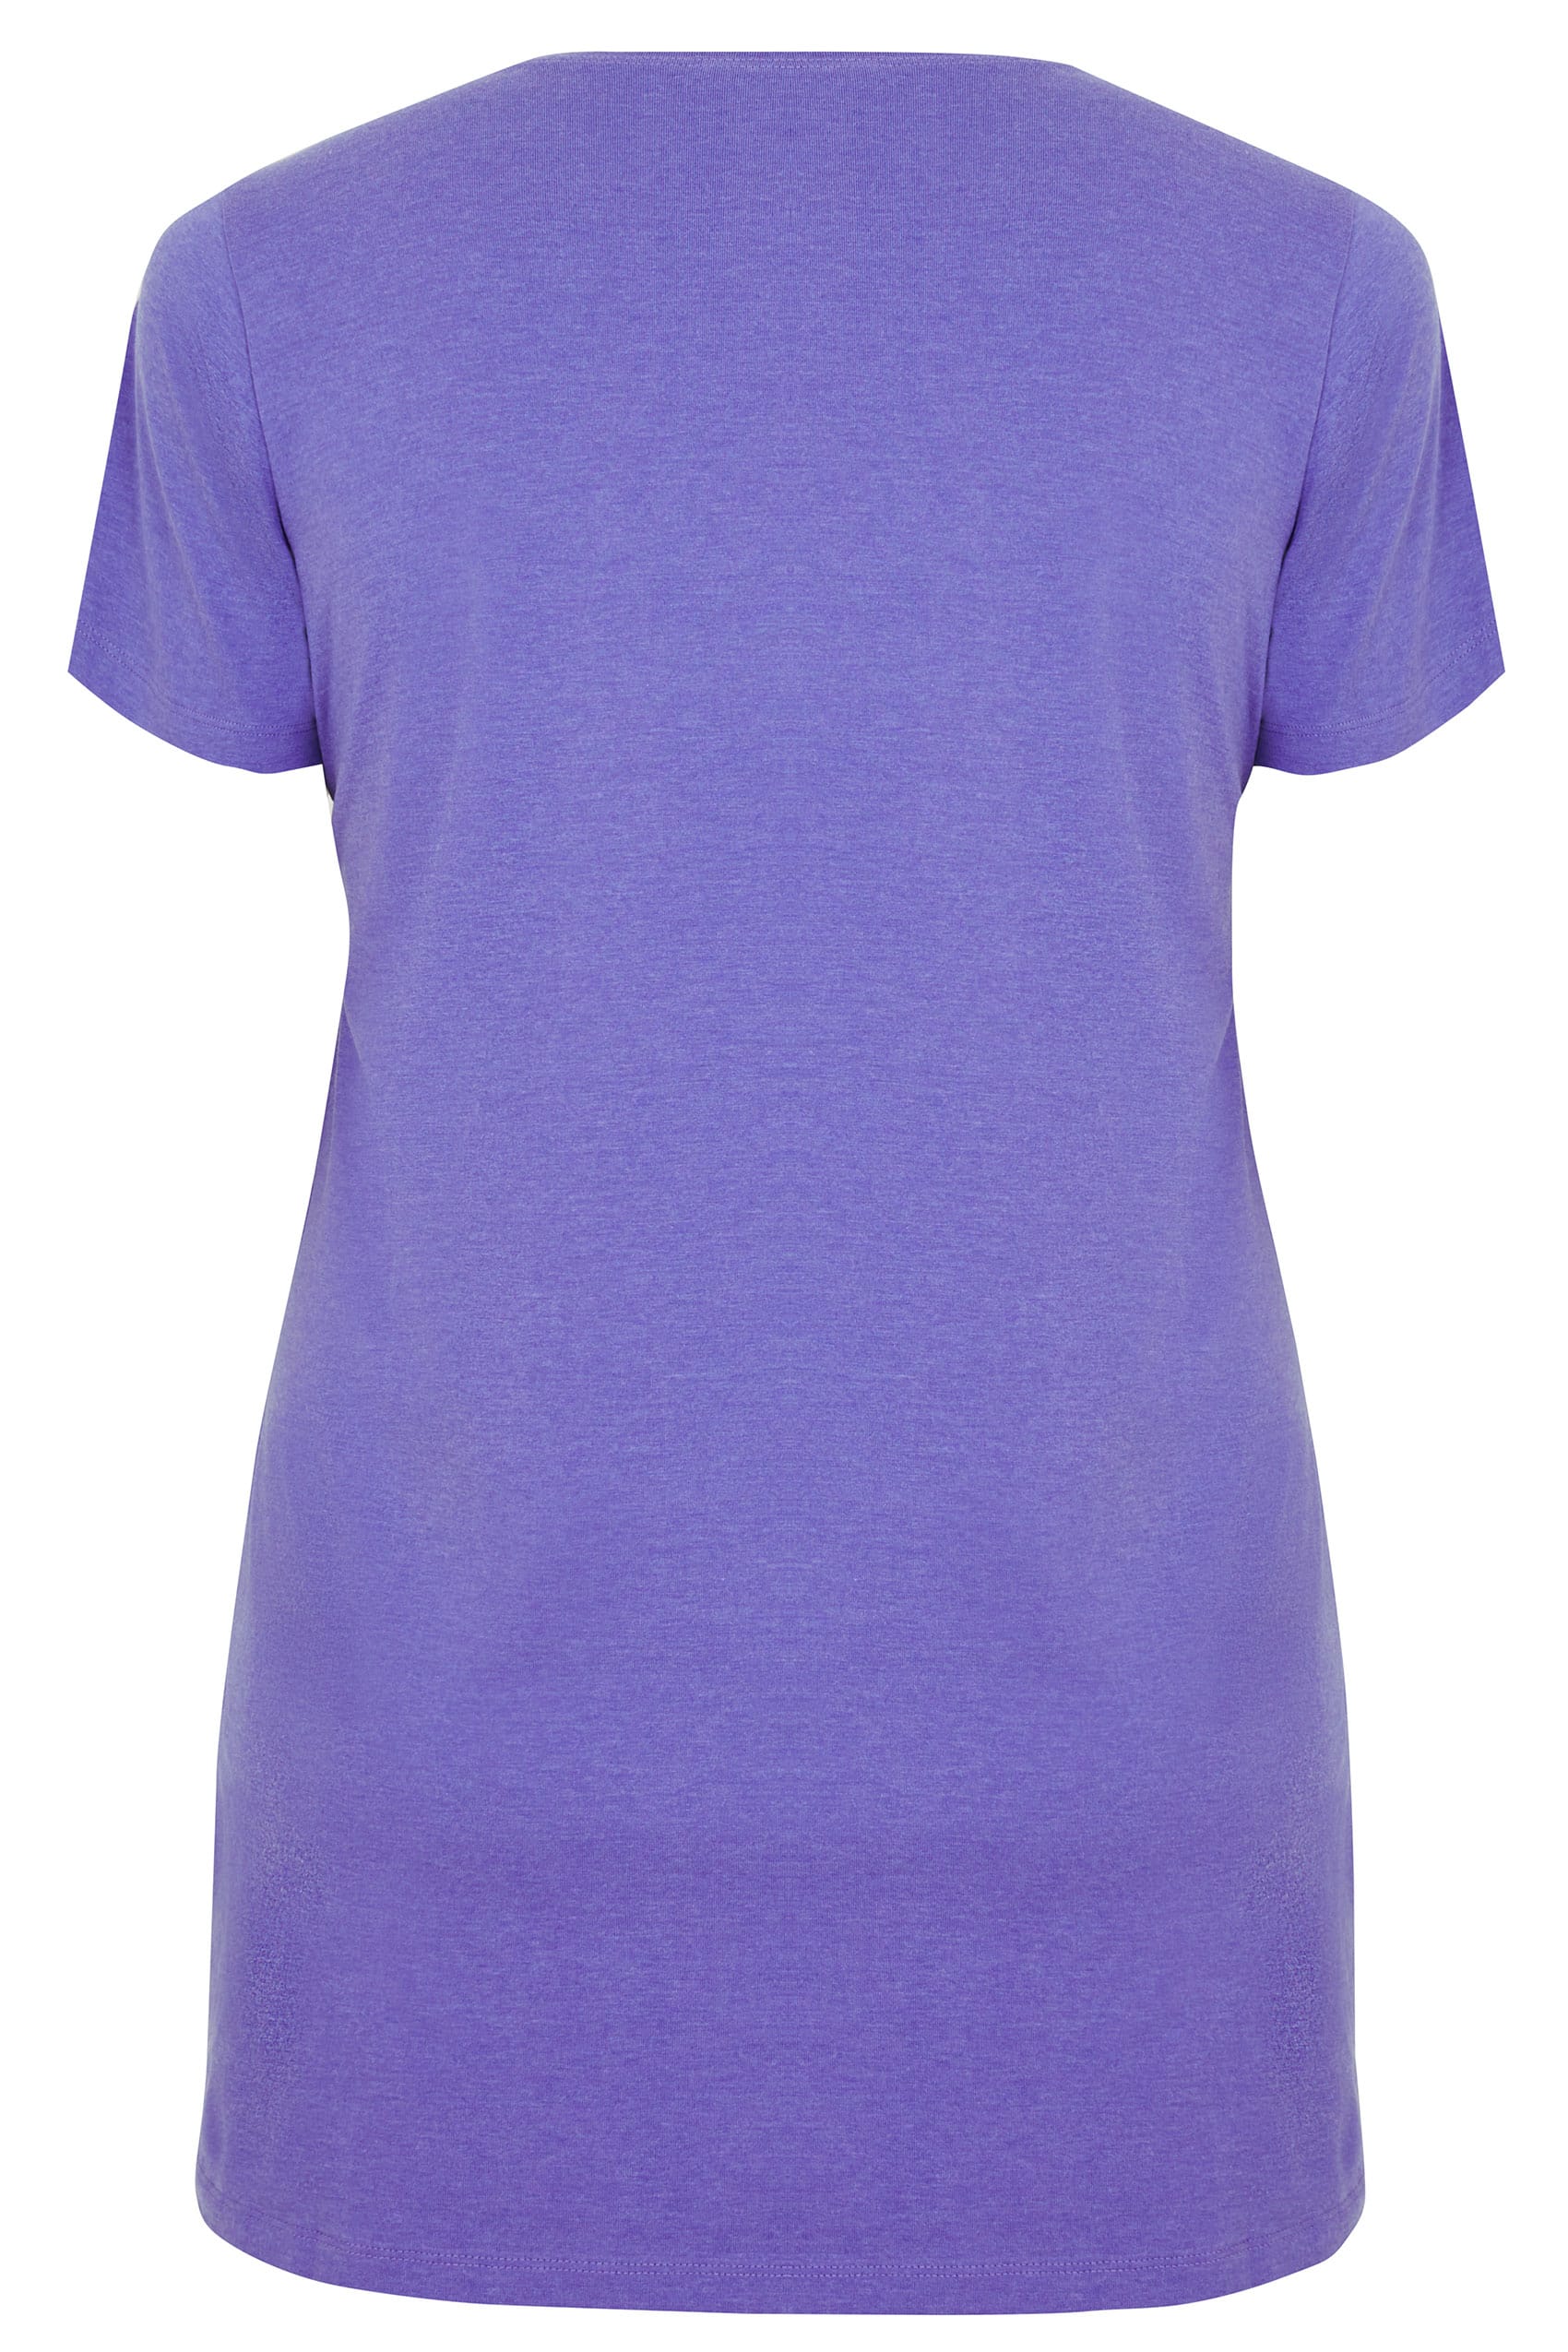 Purple Marl Scoop Neck Longline Jersey T Shirt Plus Size 16 To 36